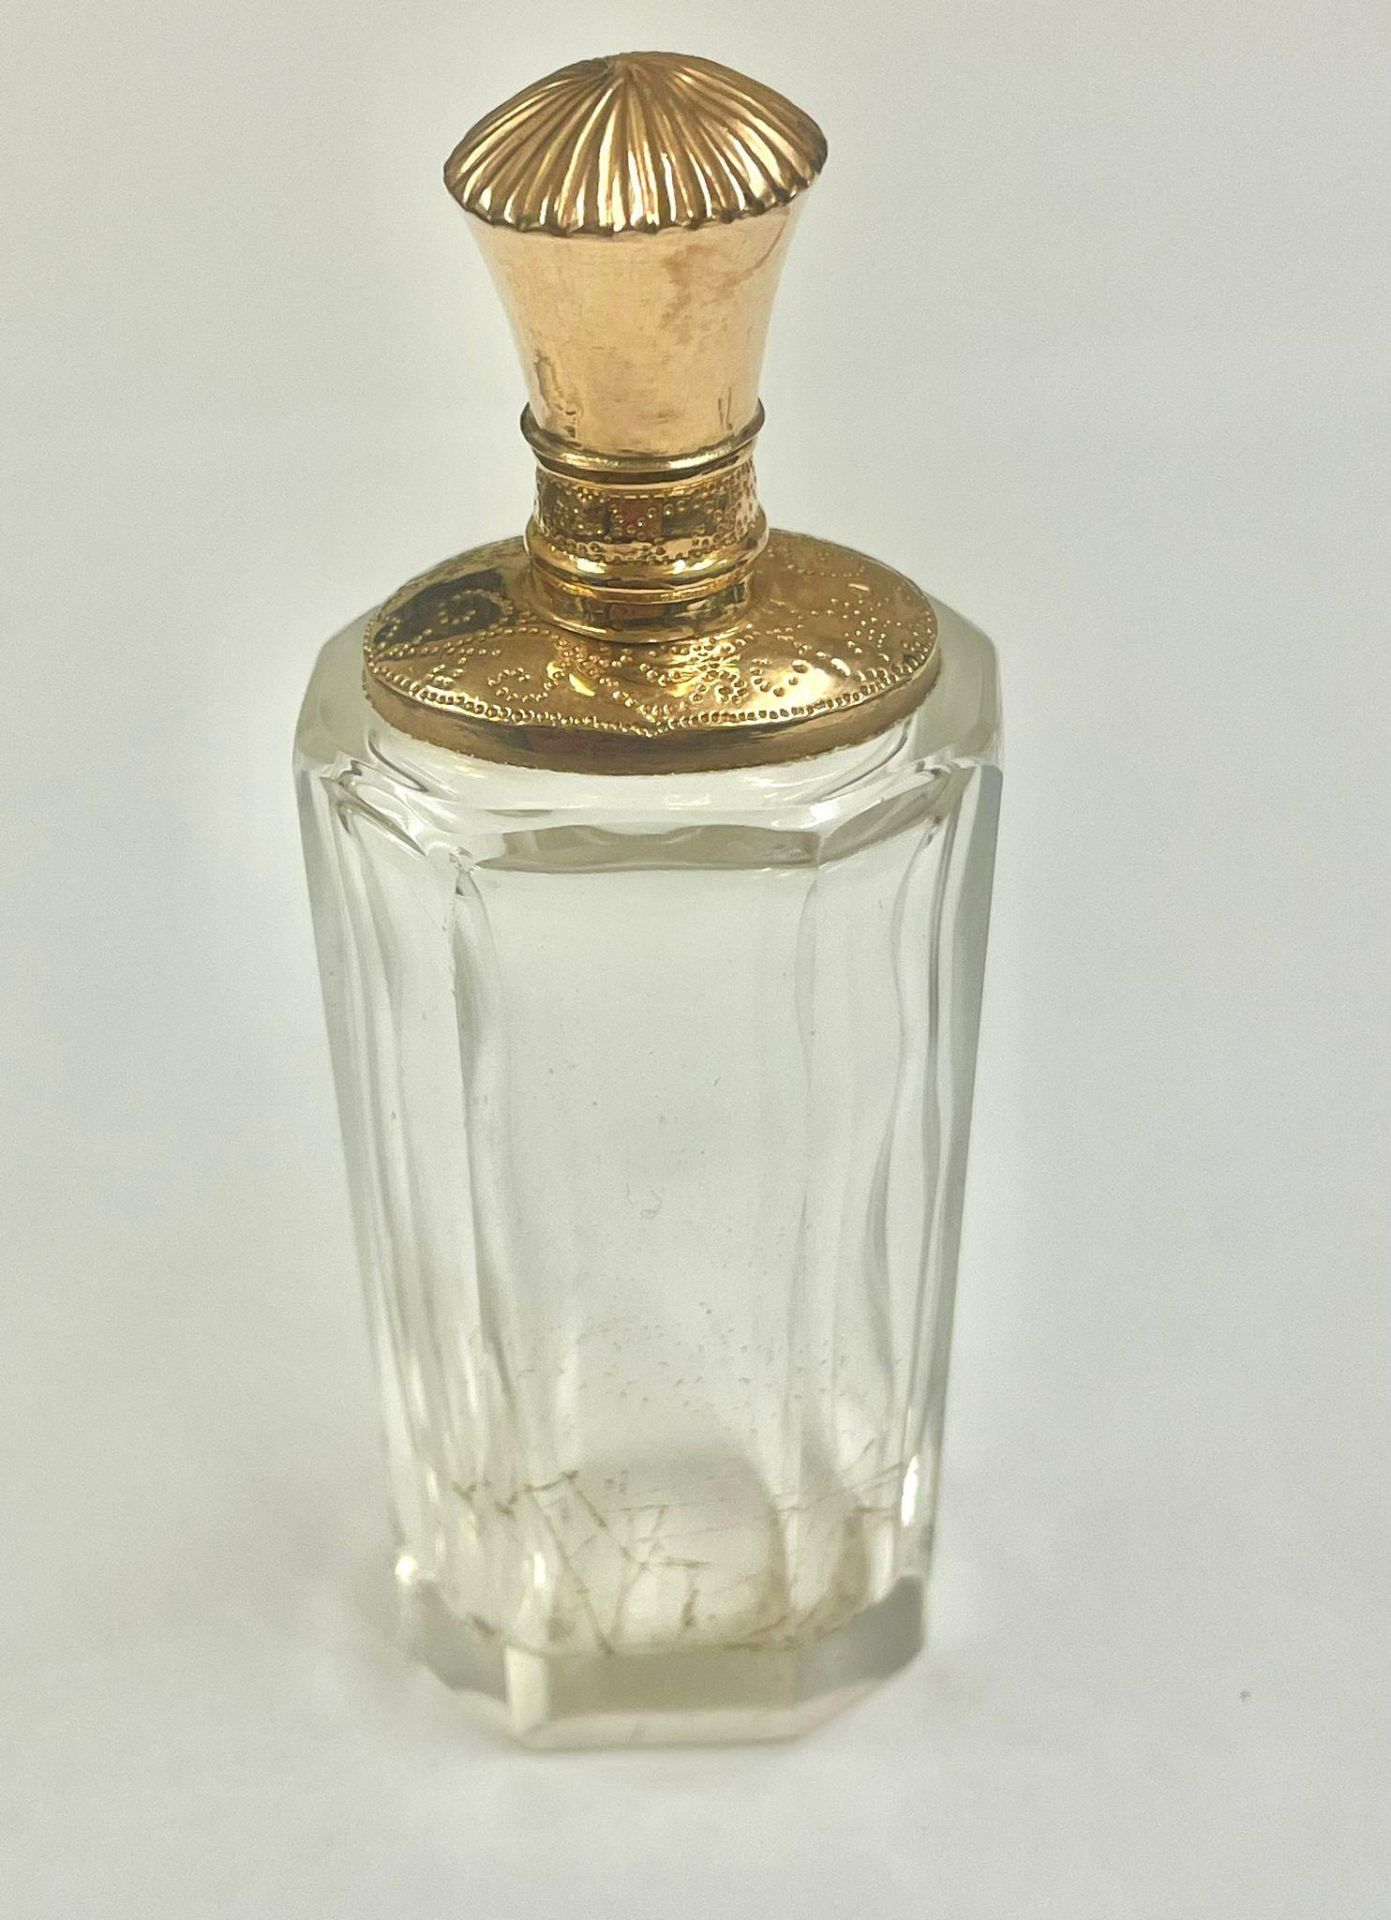 14ct gold lid scent bottle